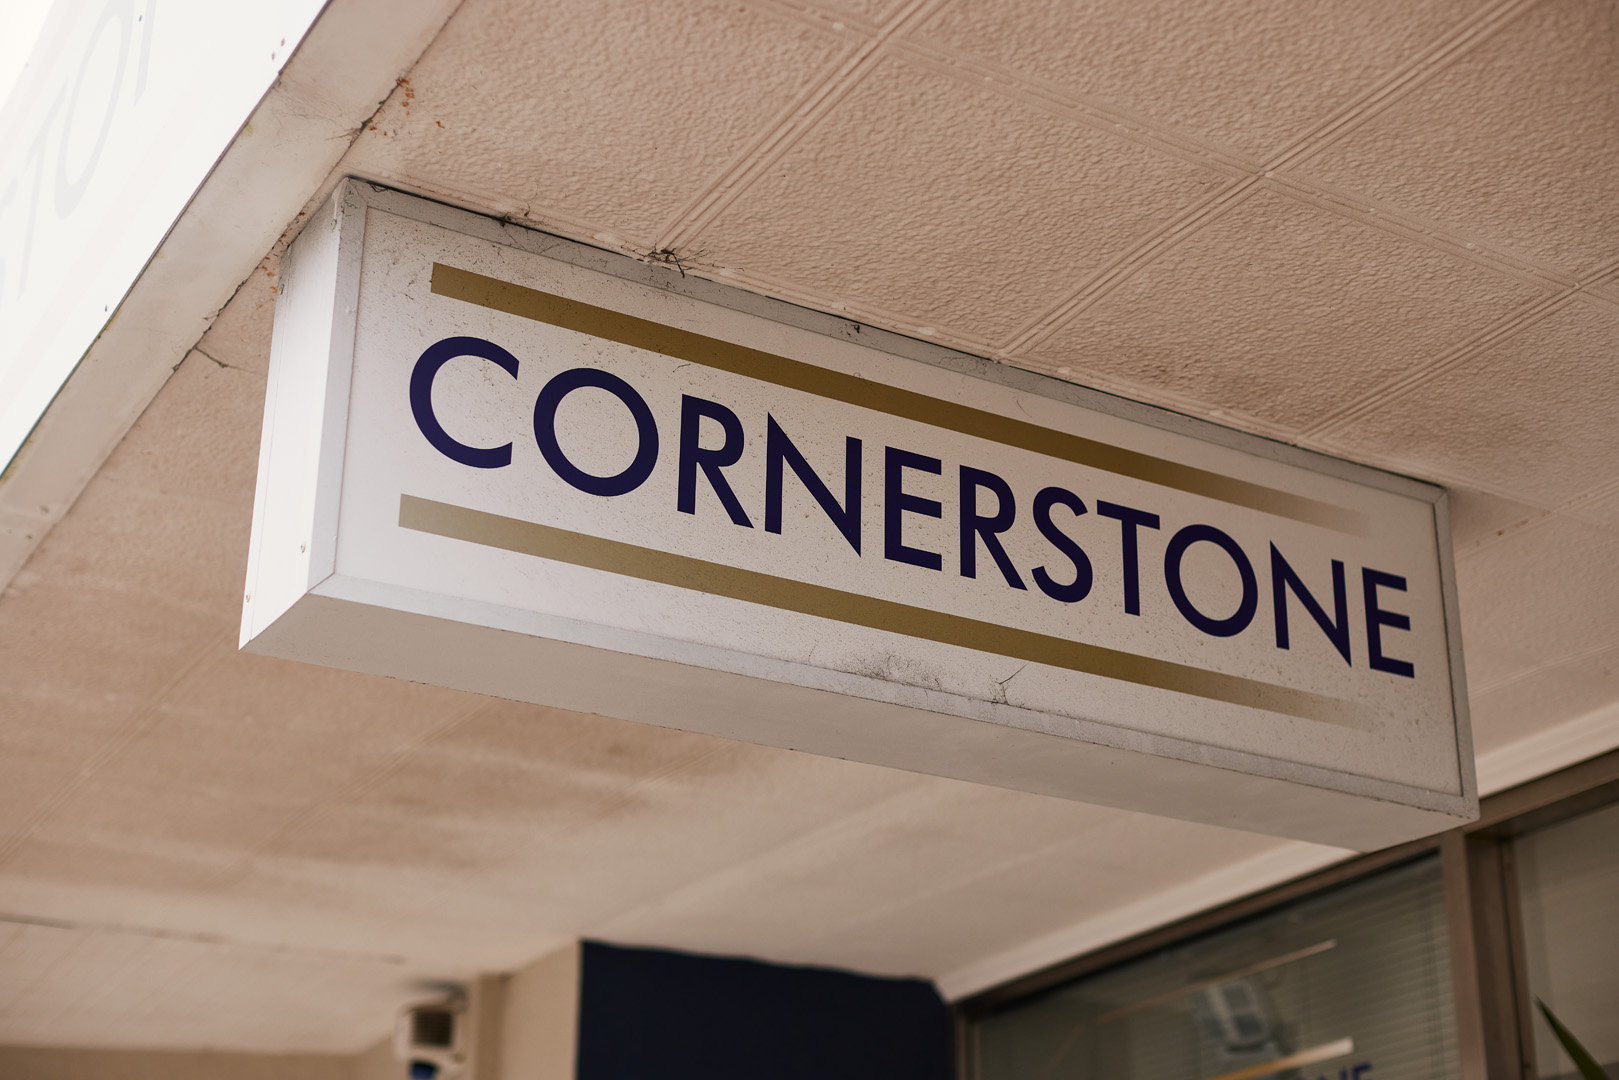 Cornerstone Accounting Services shopfront in Kingston Tasmania